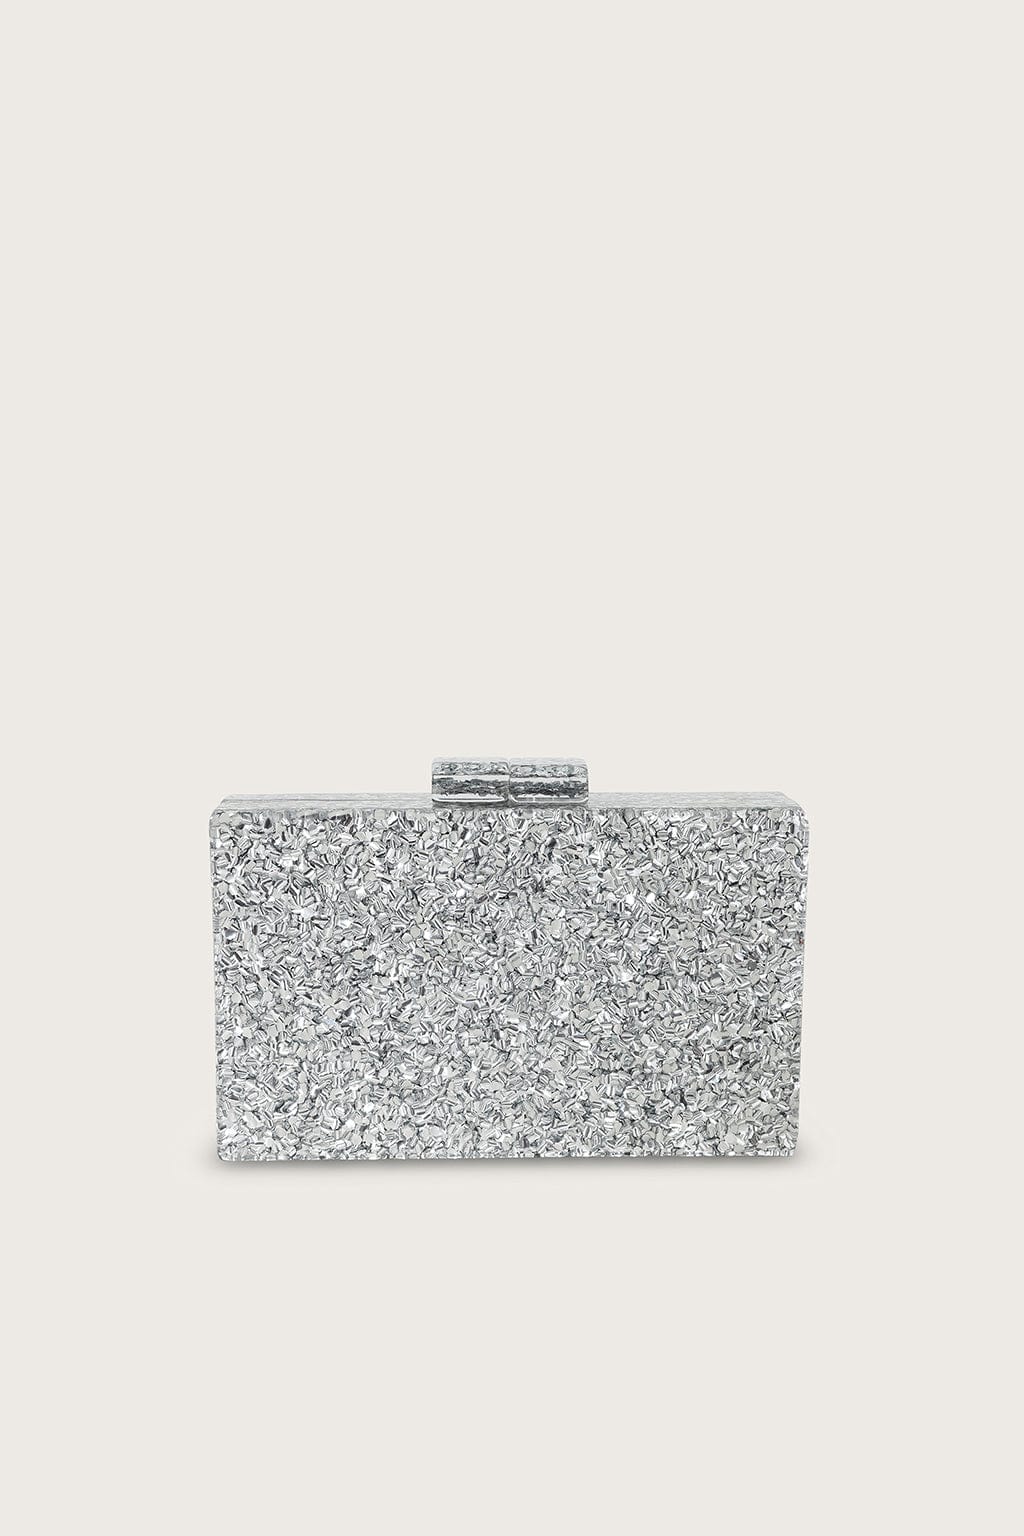 HANA Textured Box Clutch Bag in Silver